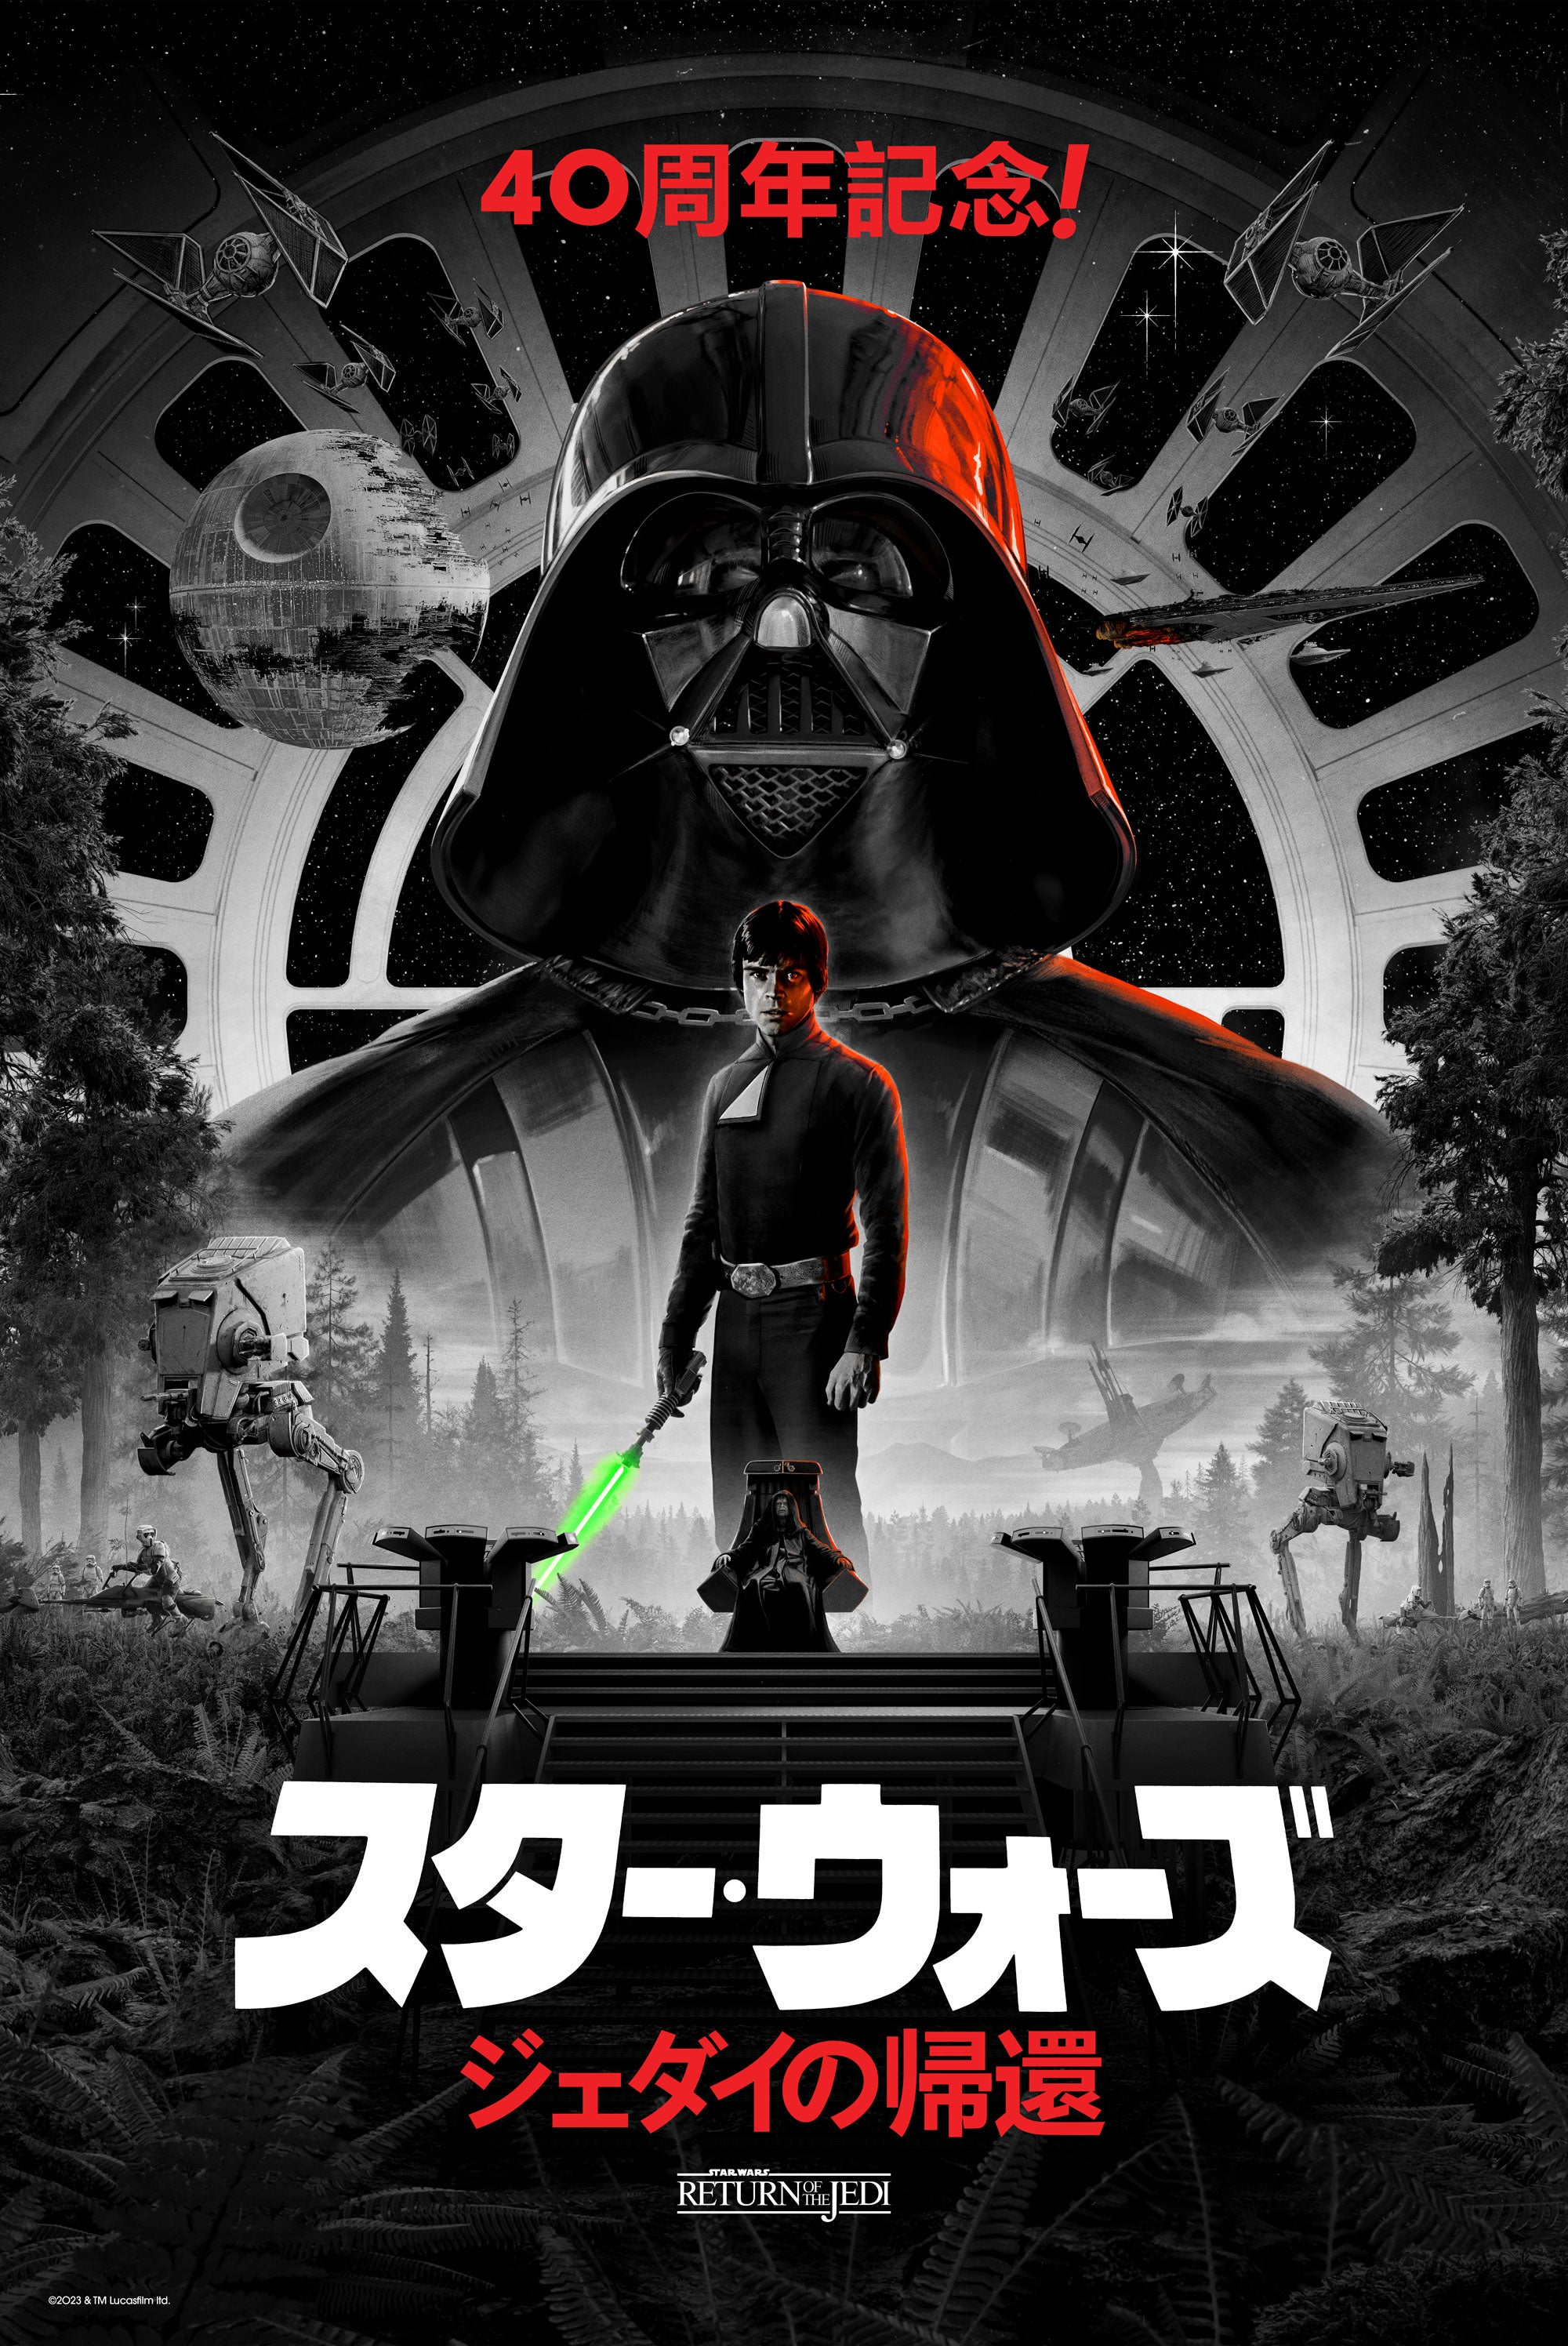 Return of the Jedi by Matt Ferguson; Variant - Japanese - Limited edition (Image: Lucasfilm)